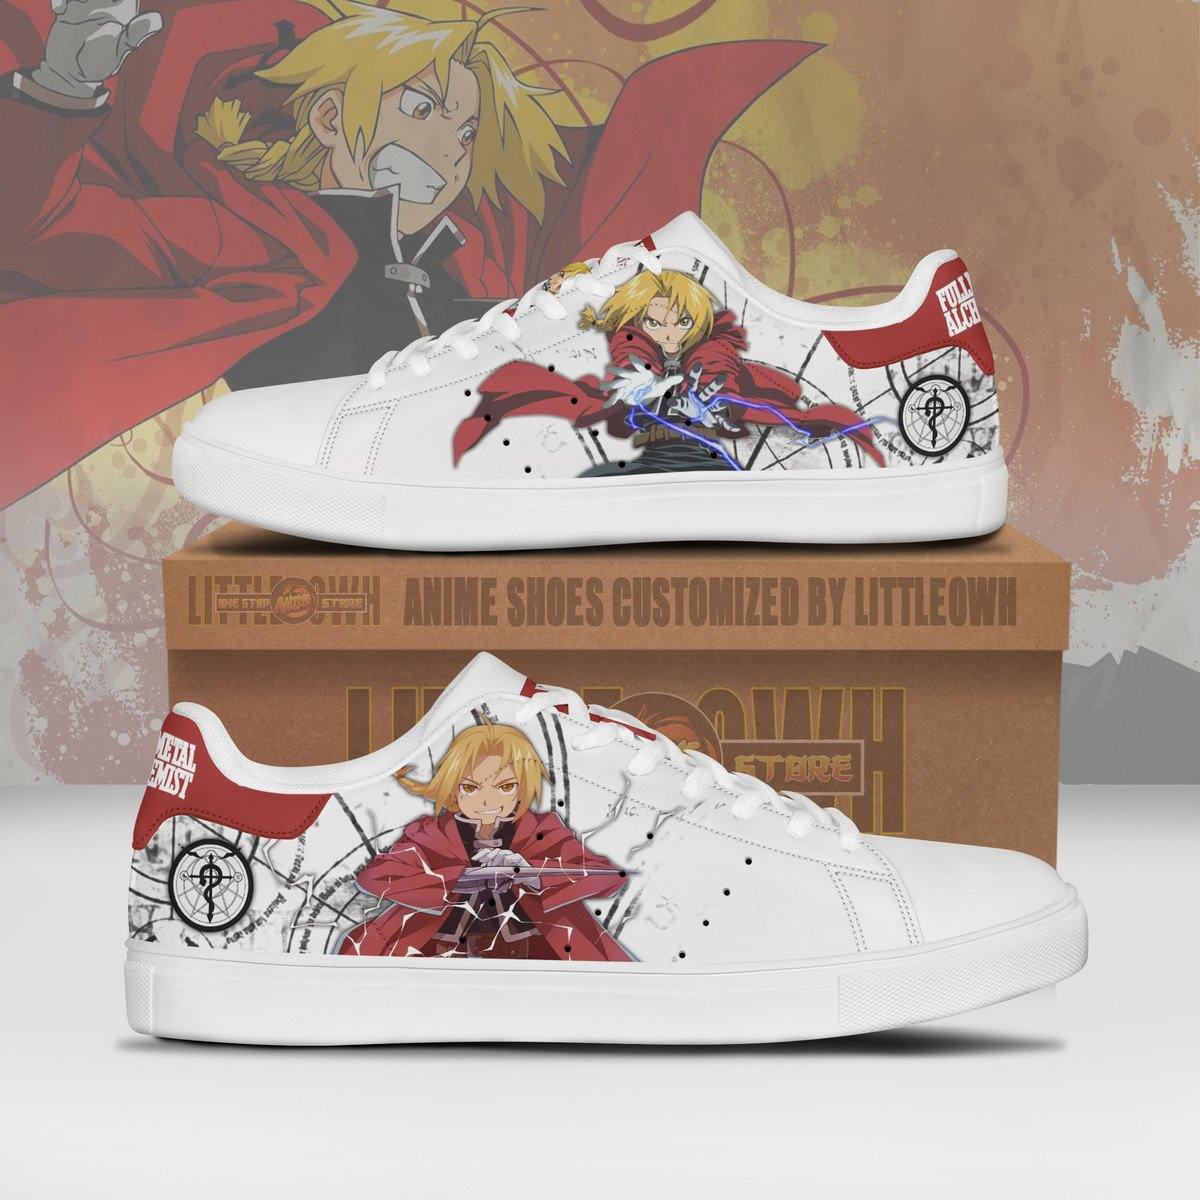 Fullmetal Alchemist Edward Elric Skateboard Shoes Custom Anime Sneakers